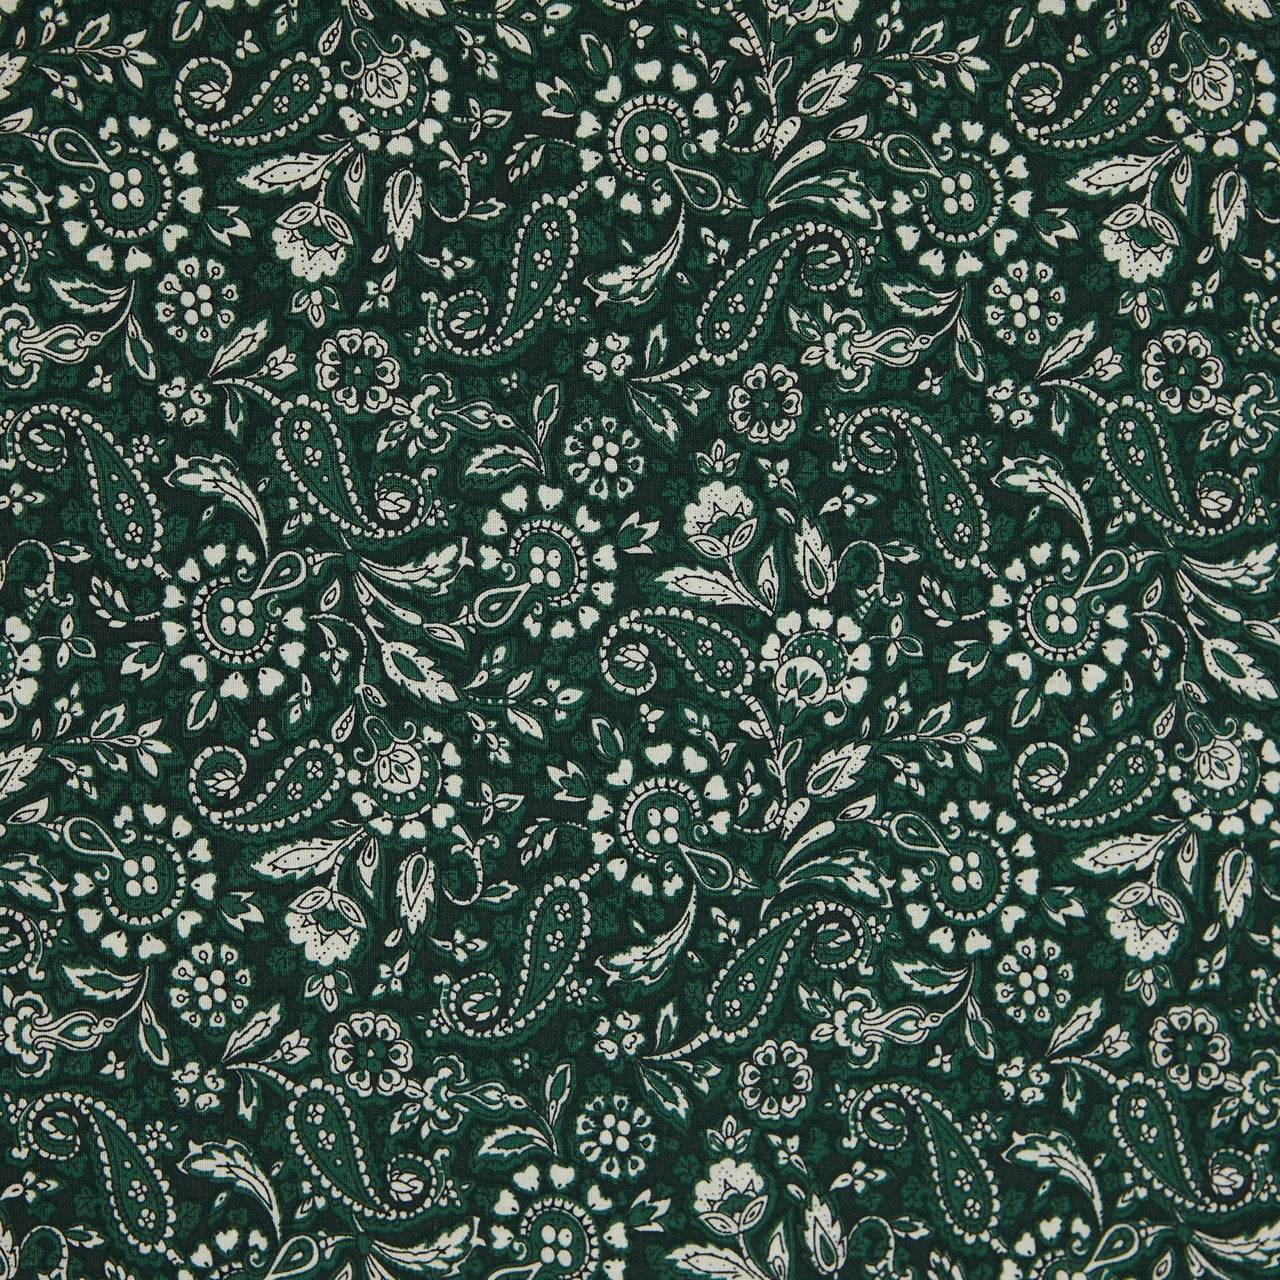 Cotton Floral - Paisley # 2 - Green (detail)